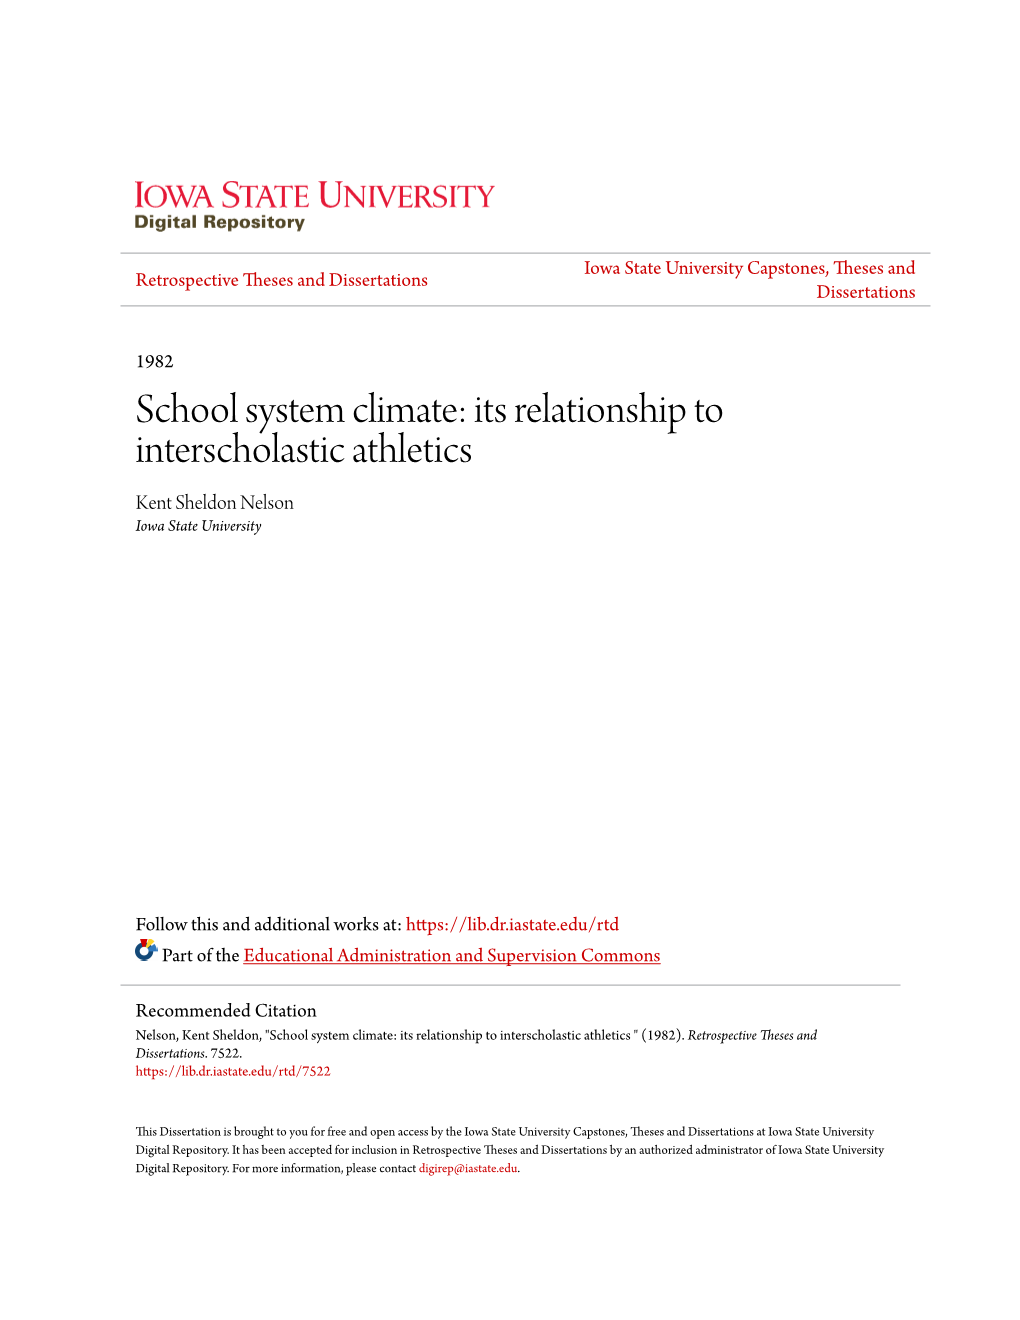 School System Climate: Its Relationship to Interscholastic Athletics Kent Sheldon Nelson Iowa State University